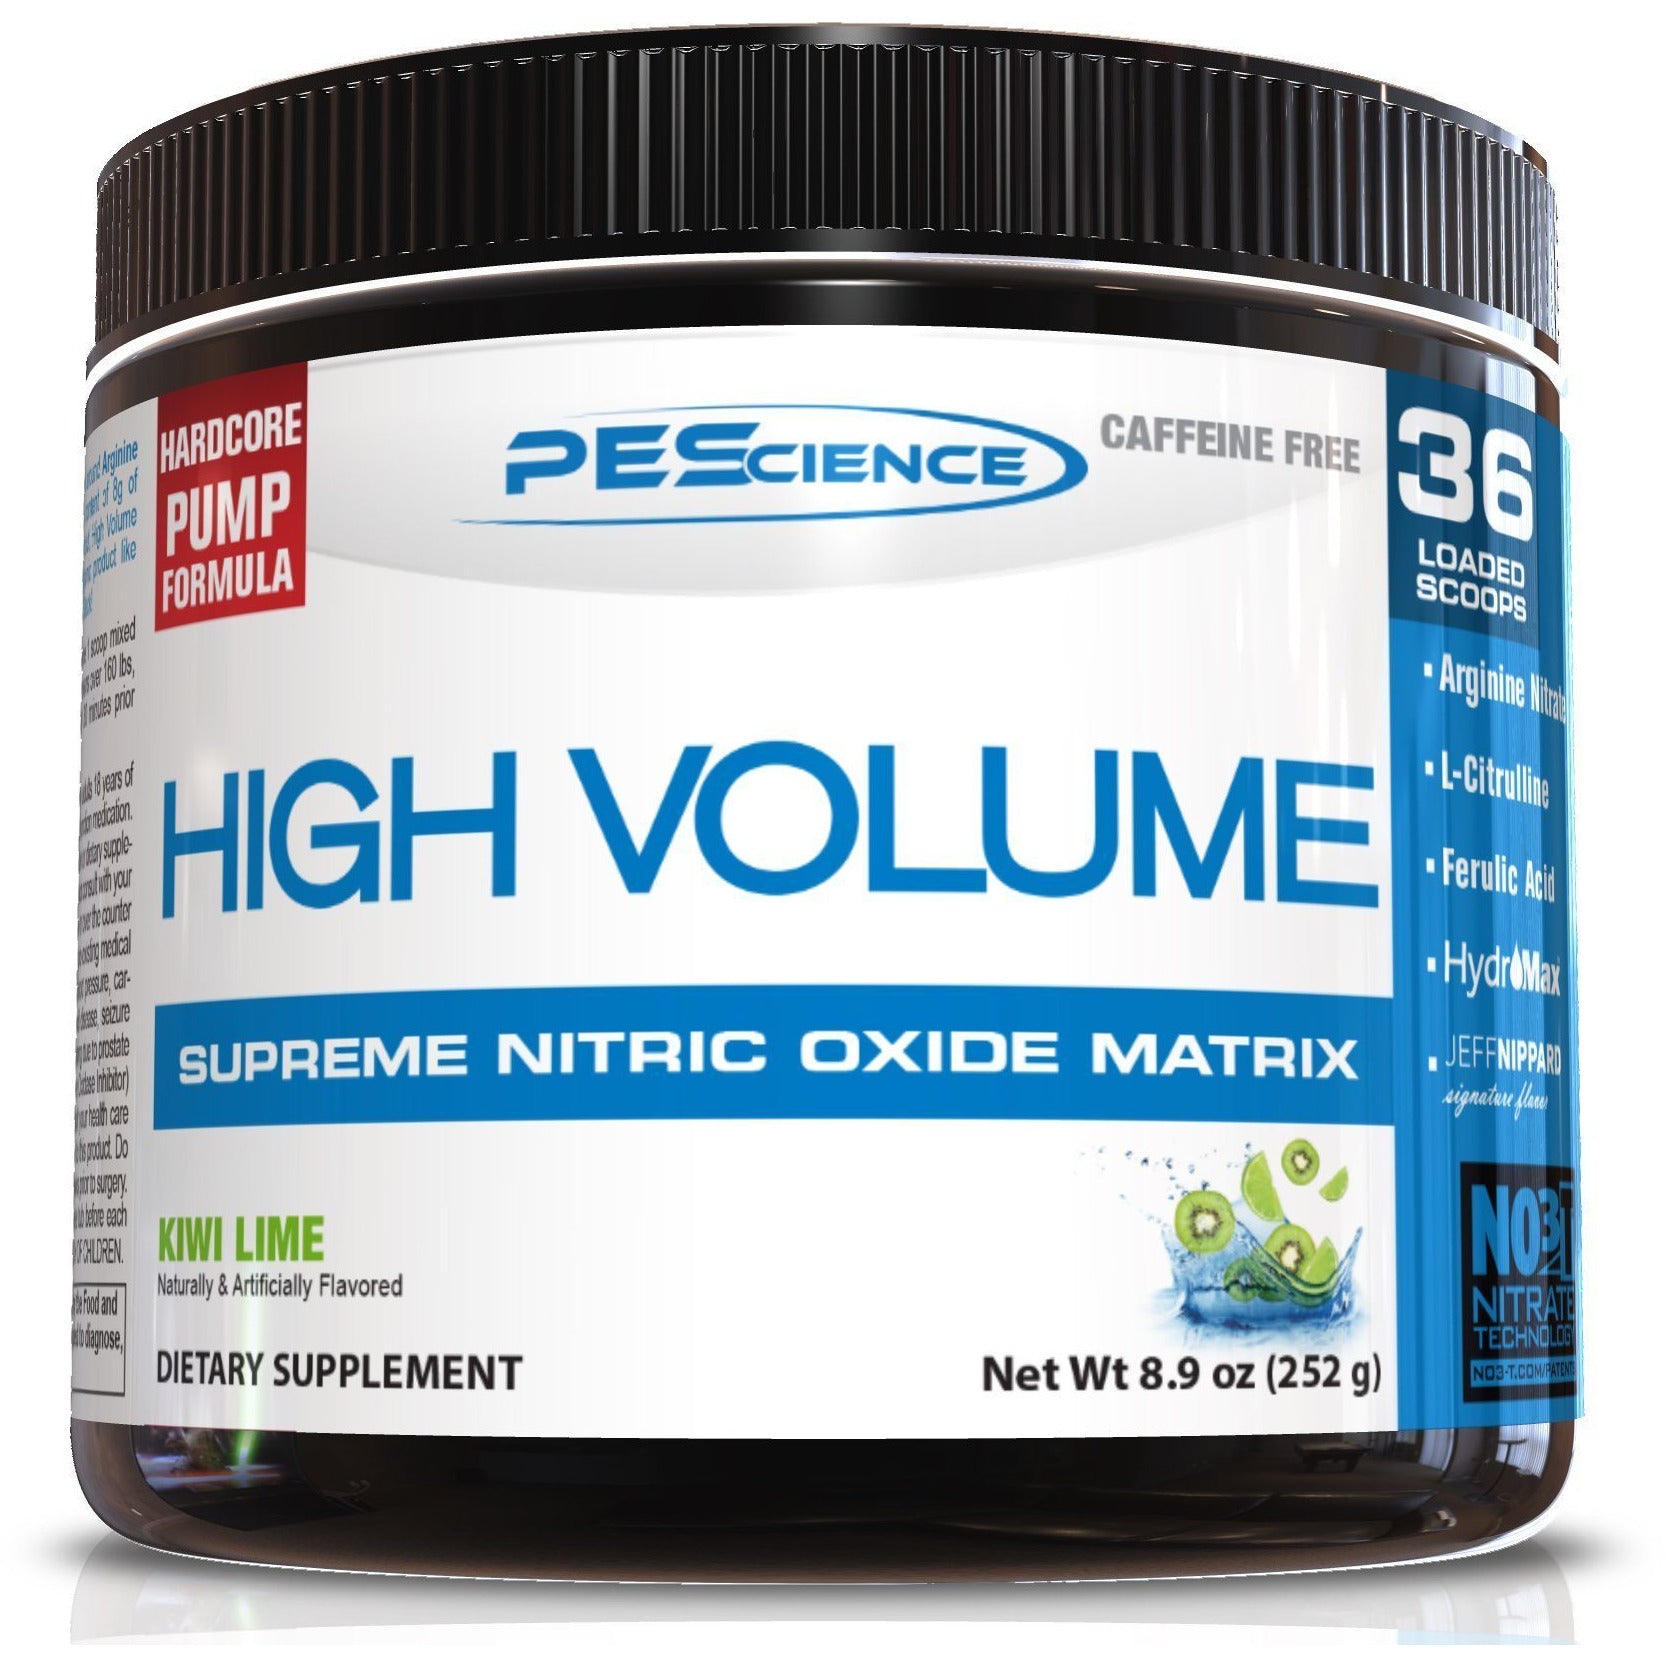 PEScience High Volume Stim-Free Pre-Workout (36 servings) Pre-workout Kiwi Lime BEST BY 07/22 PEScience